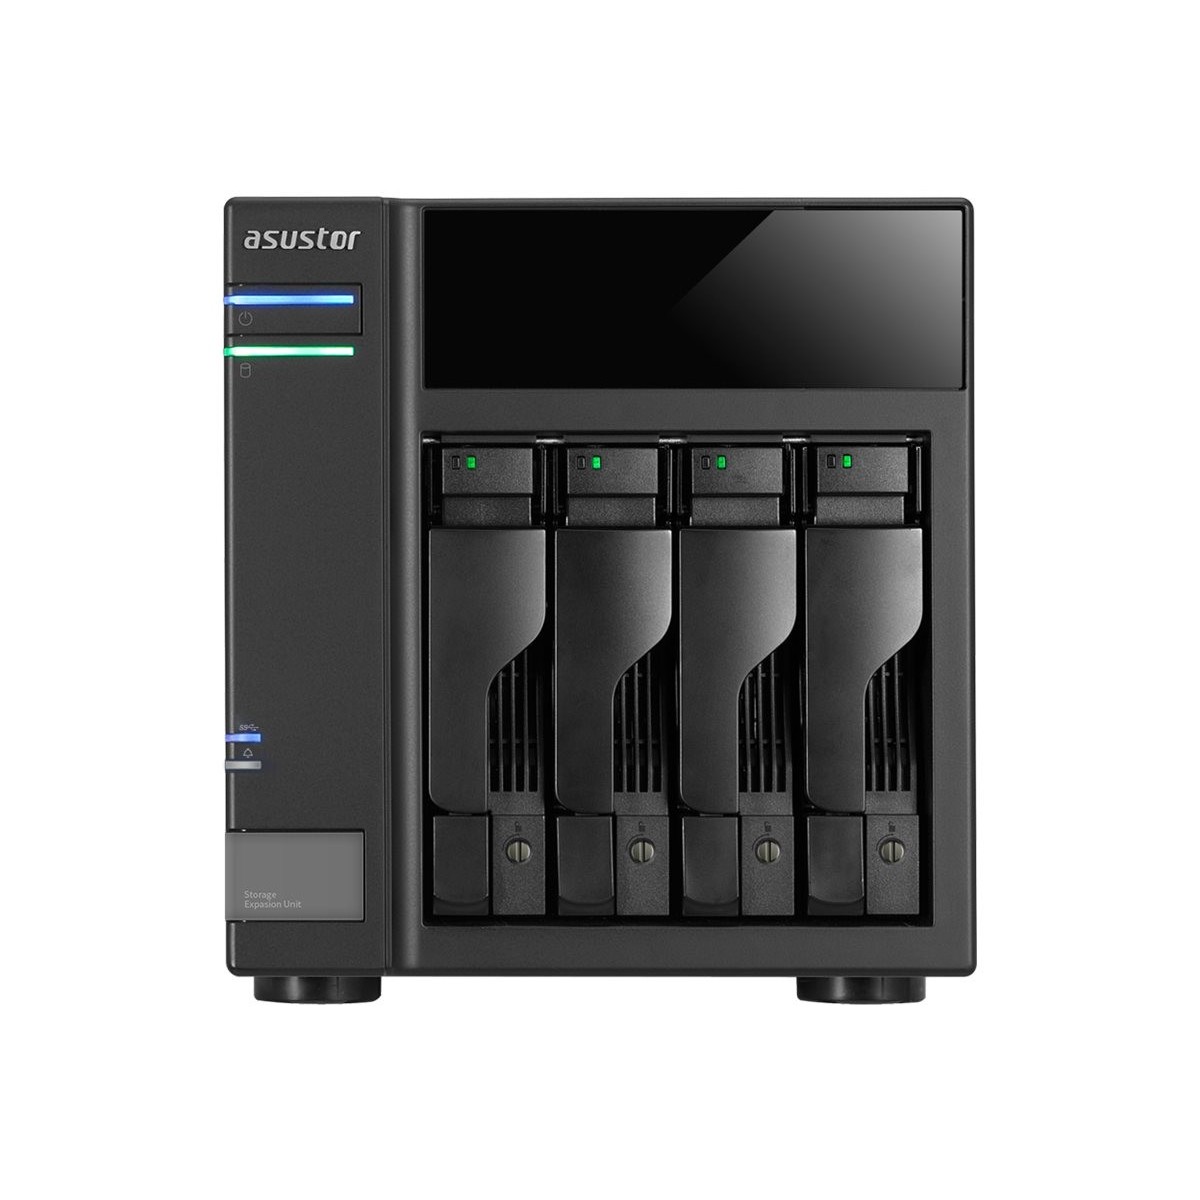 Asustor AS6004U - Erweiterung USB - Storage server - NAS